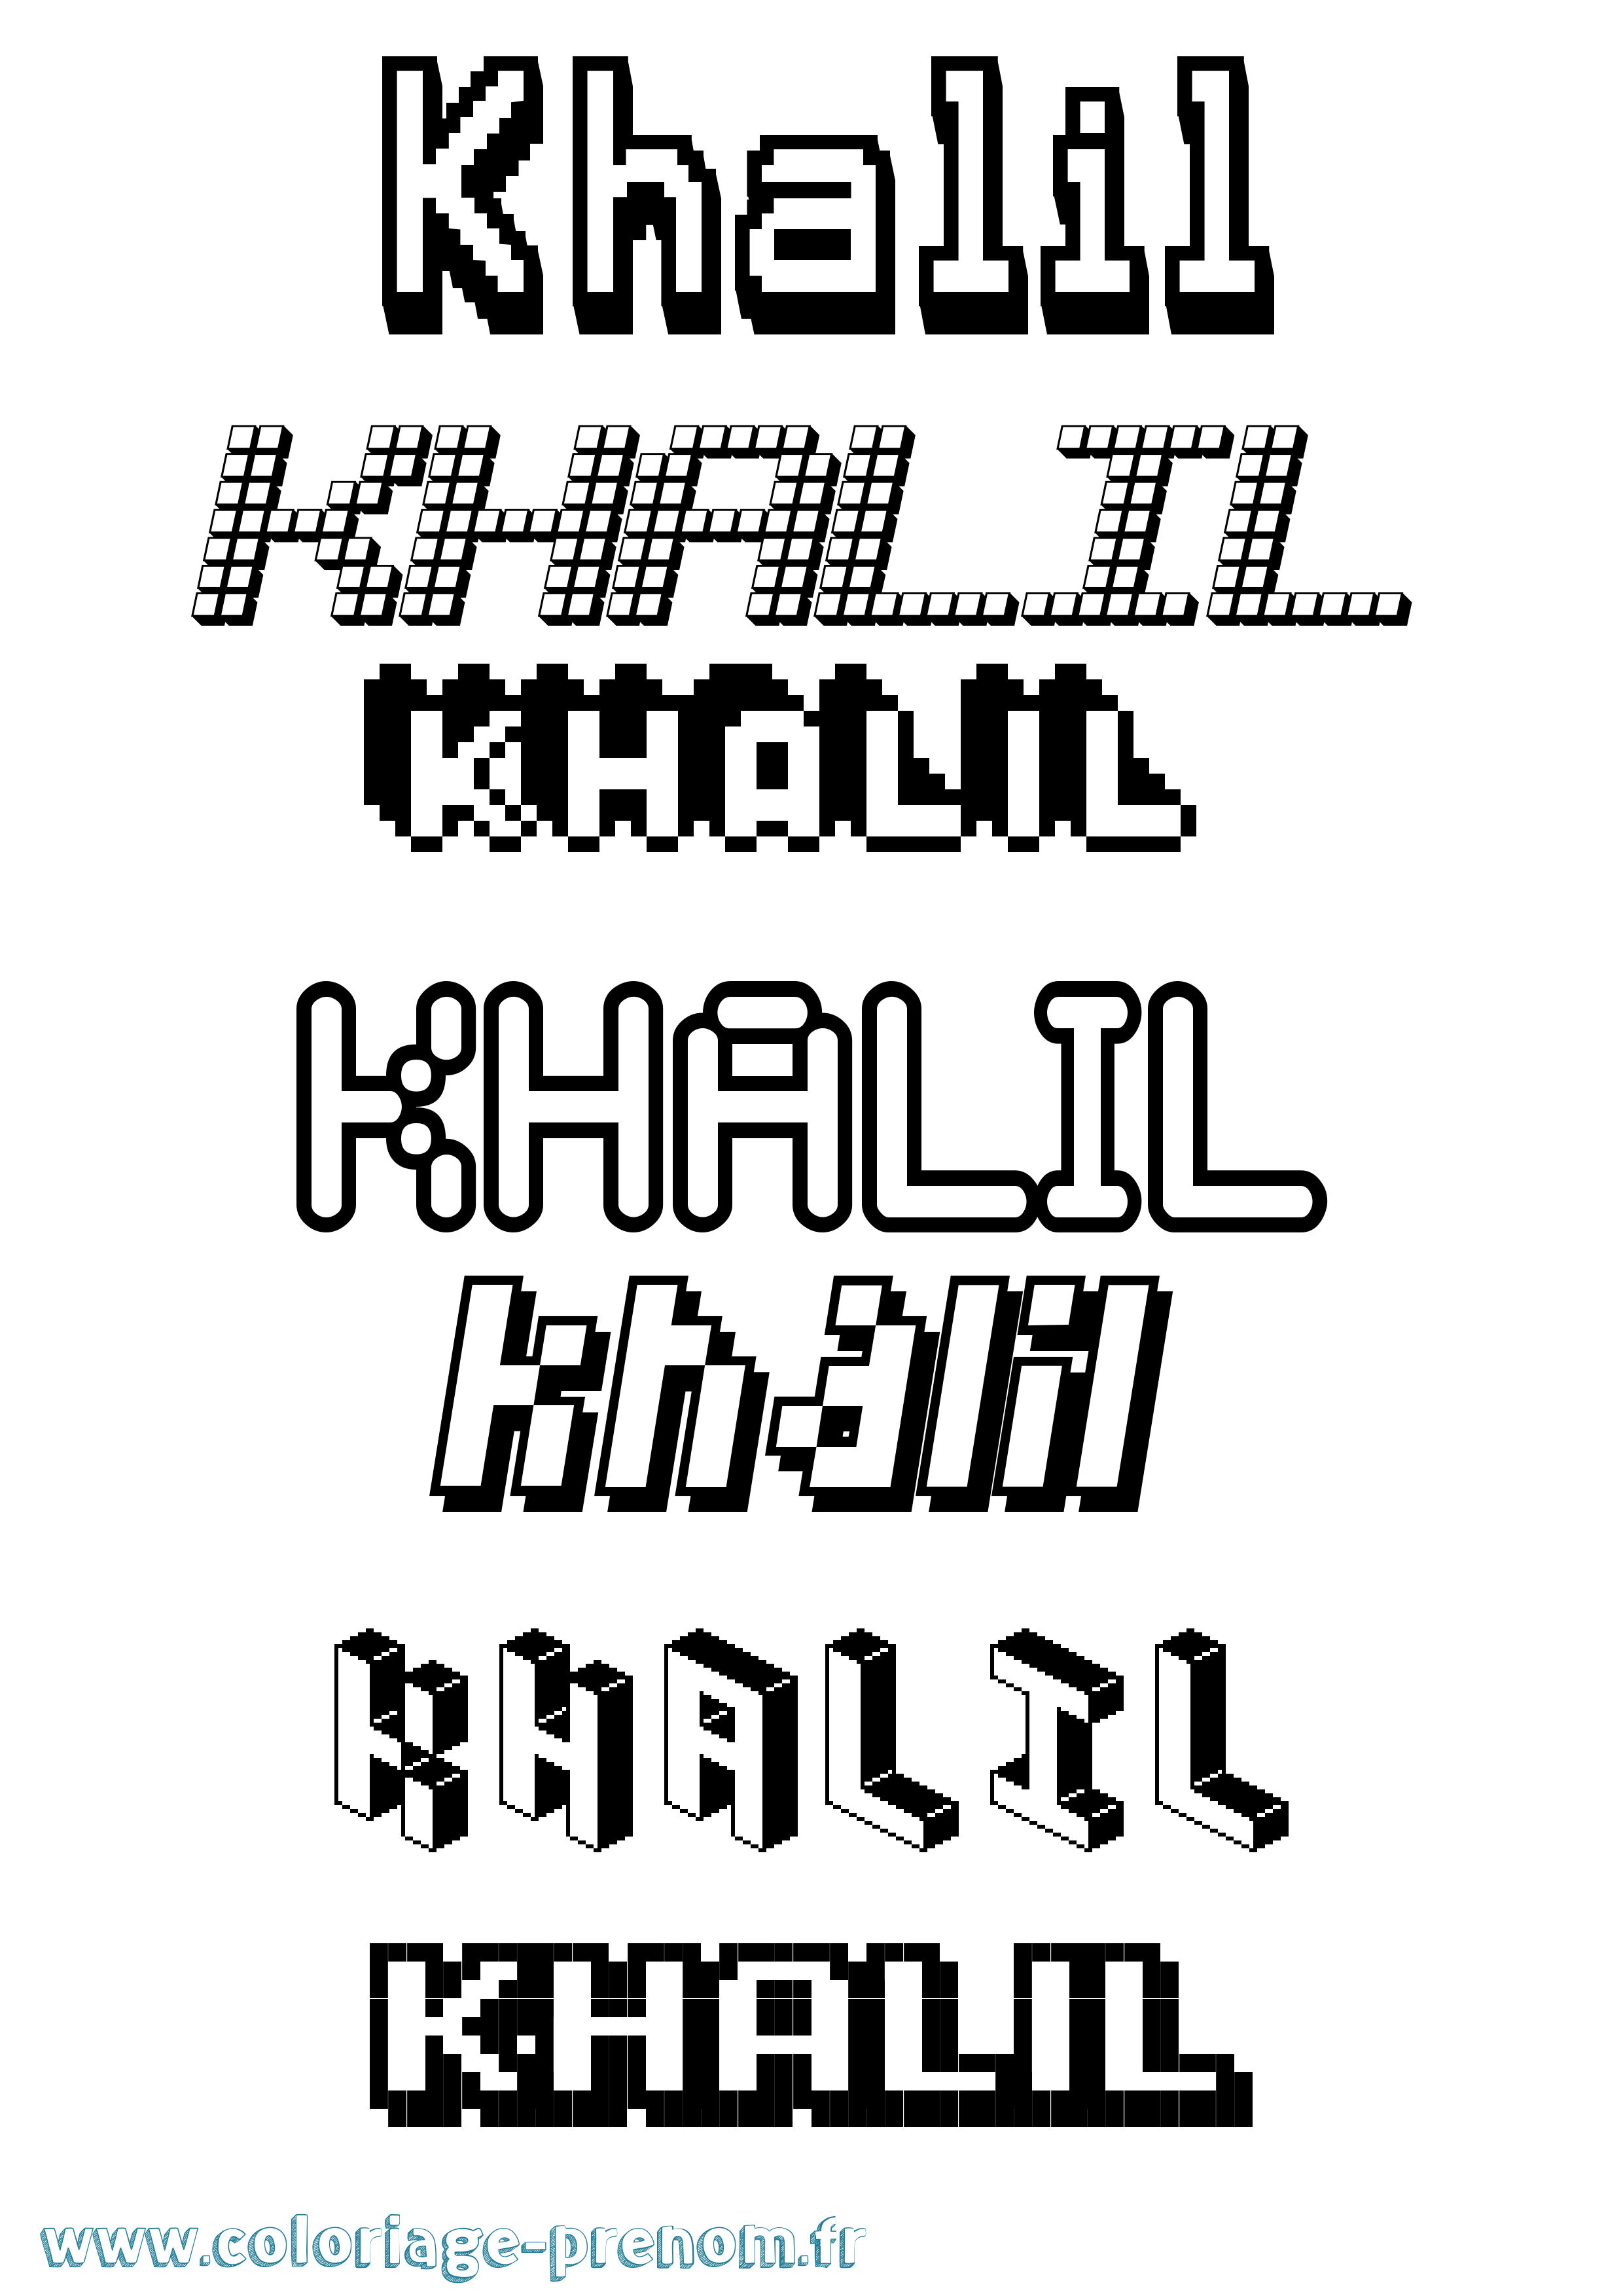 Coloriage prénom Khalil